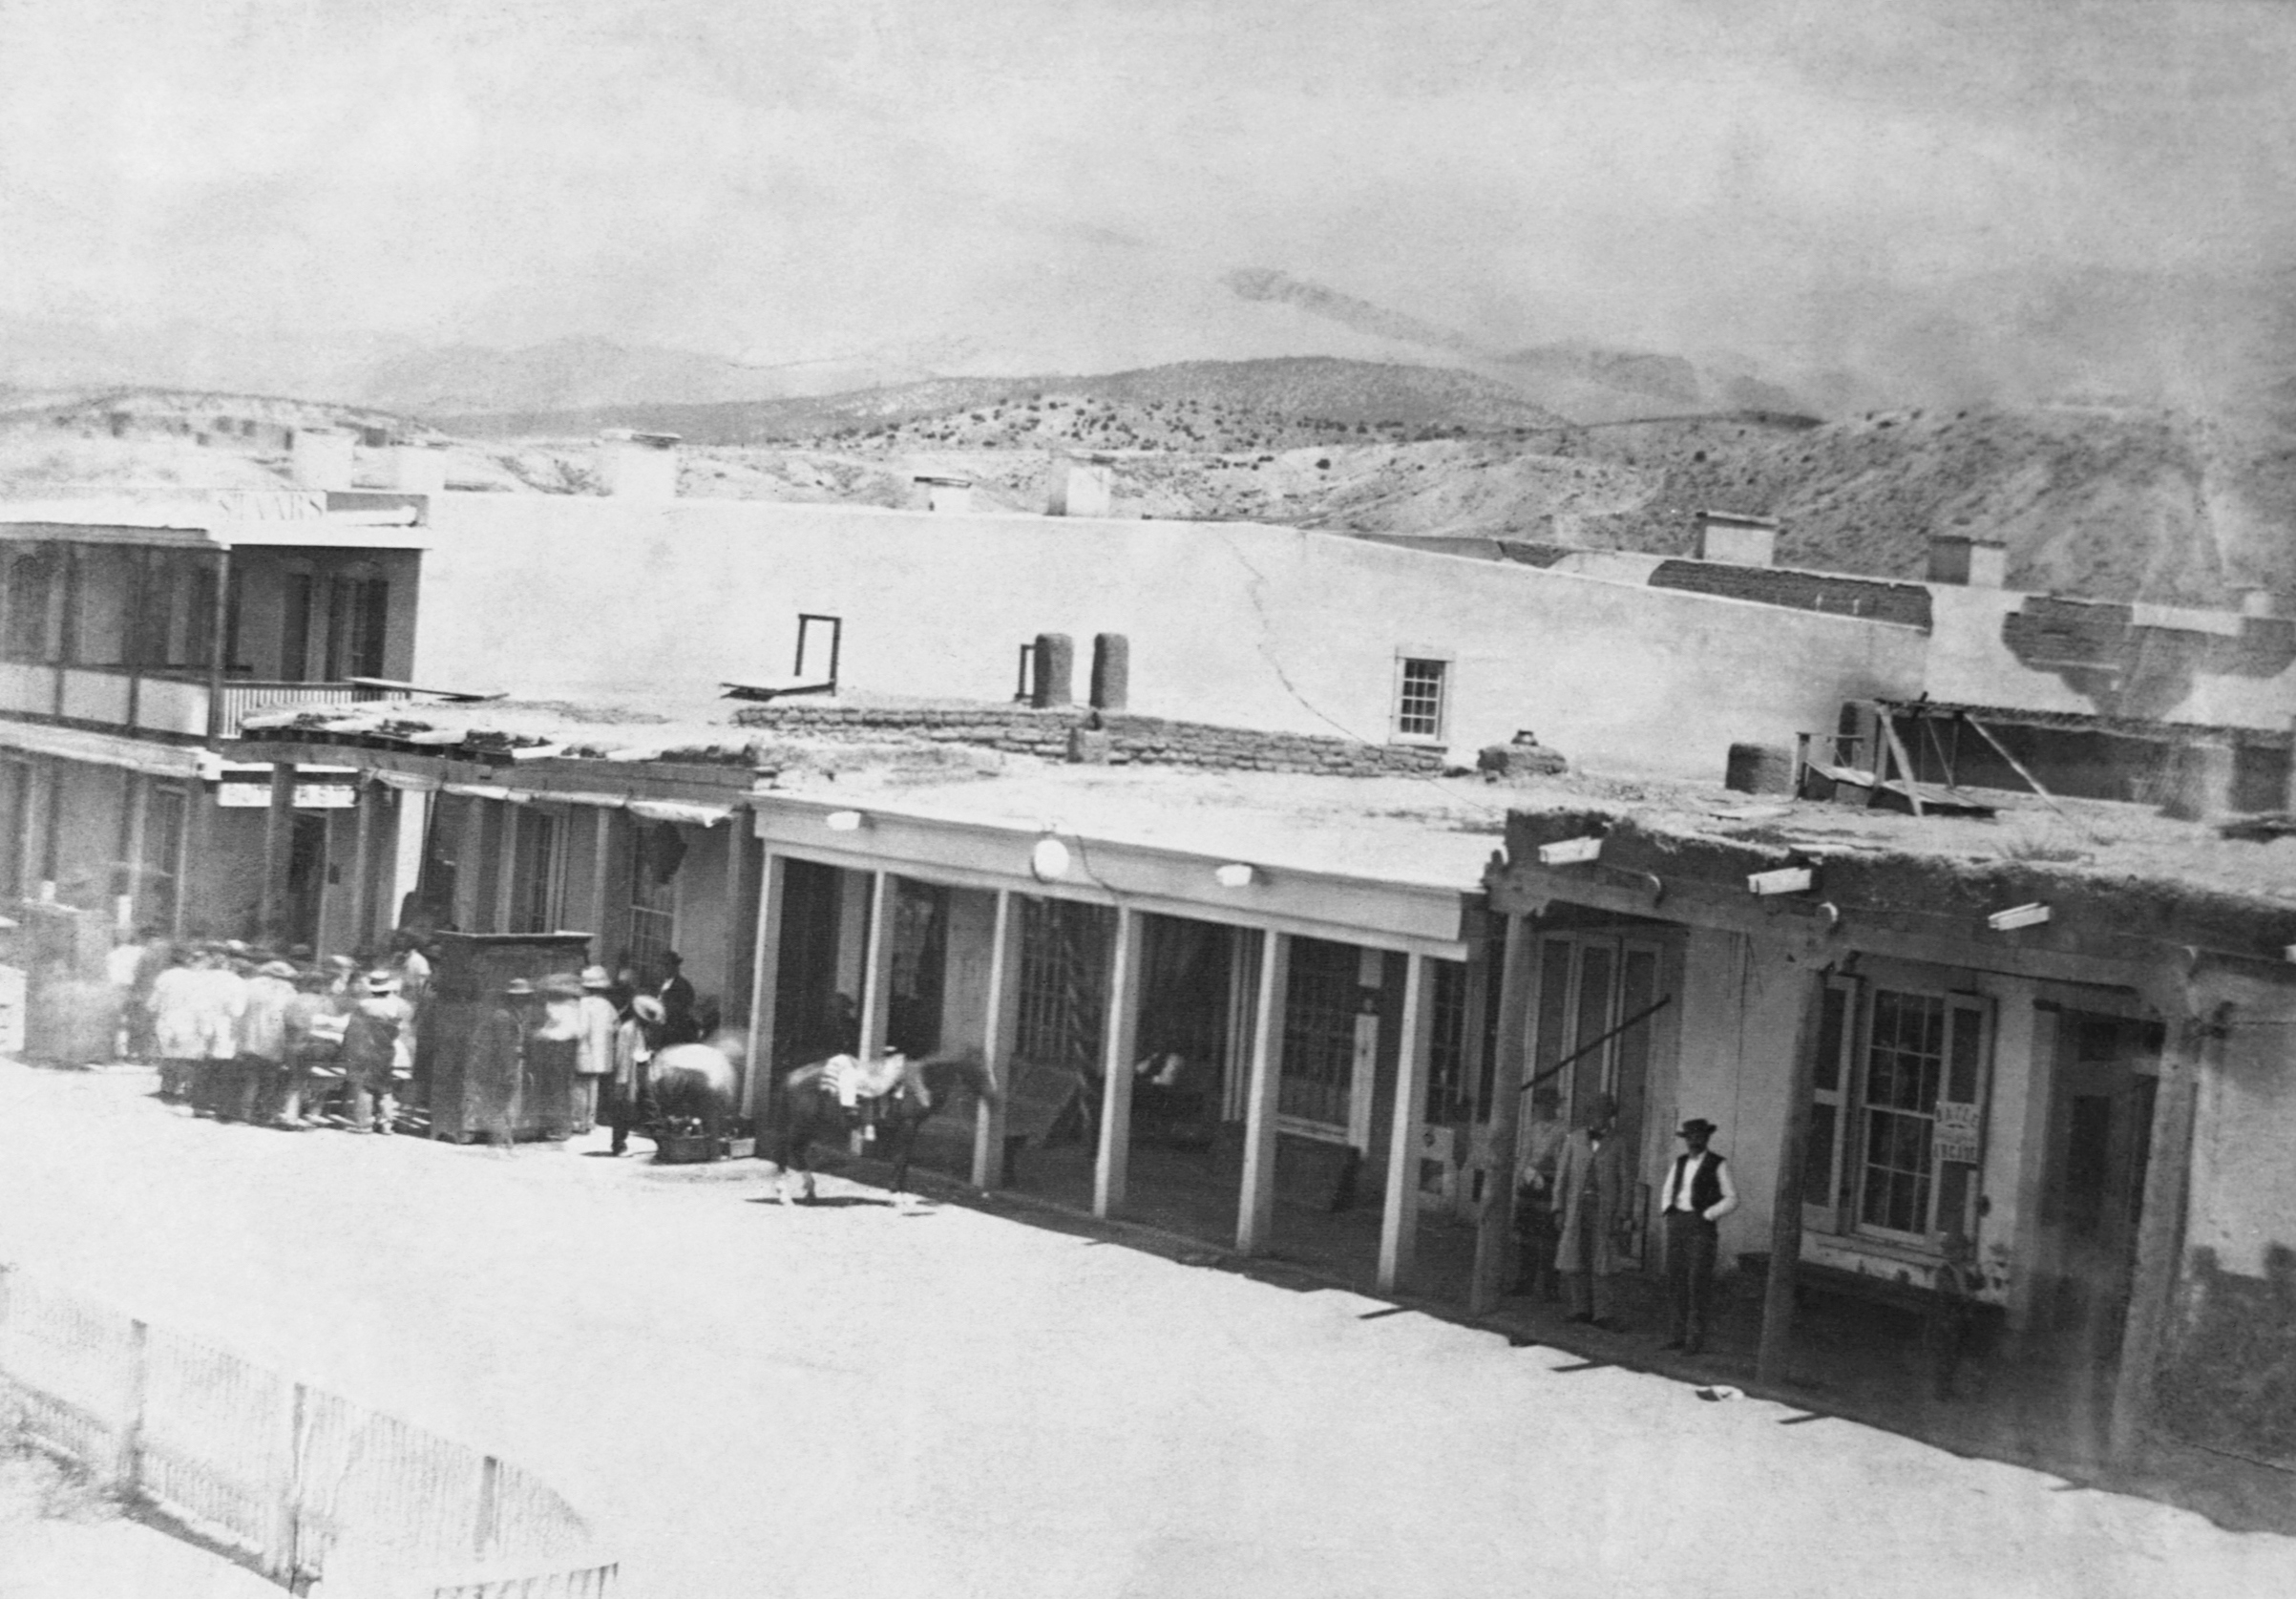 Santa Fe, New Mexico in 1866